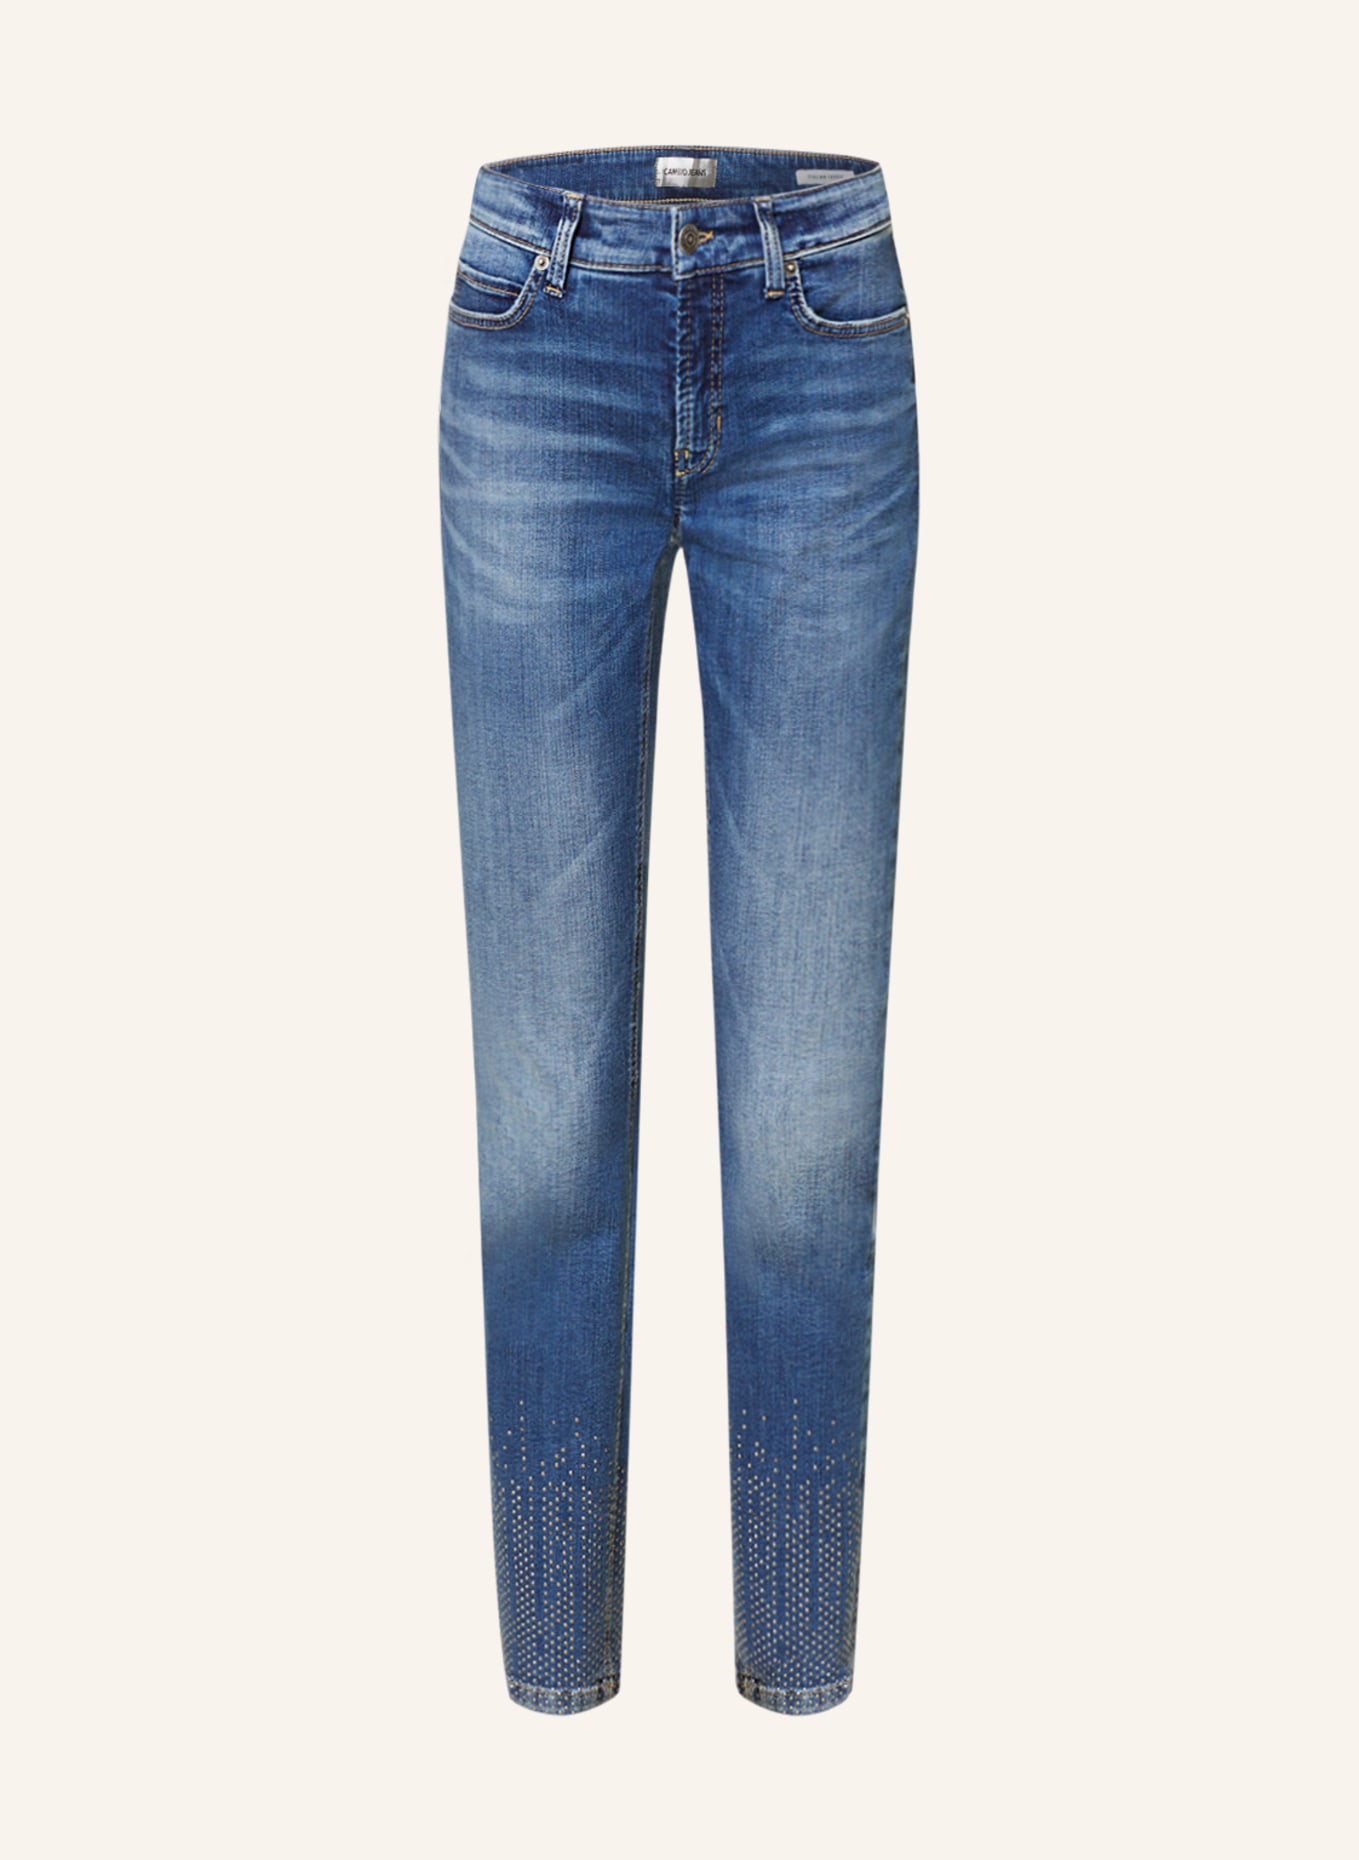 CAMBIO 7/8 jeans PARIS with decorative gems, Color: 5130 authentic splinted (Image 1)